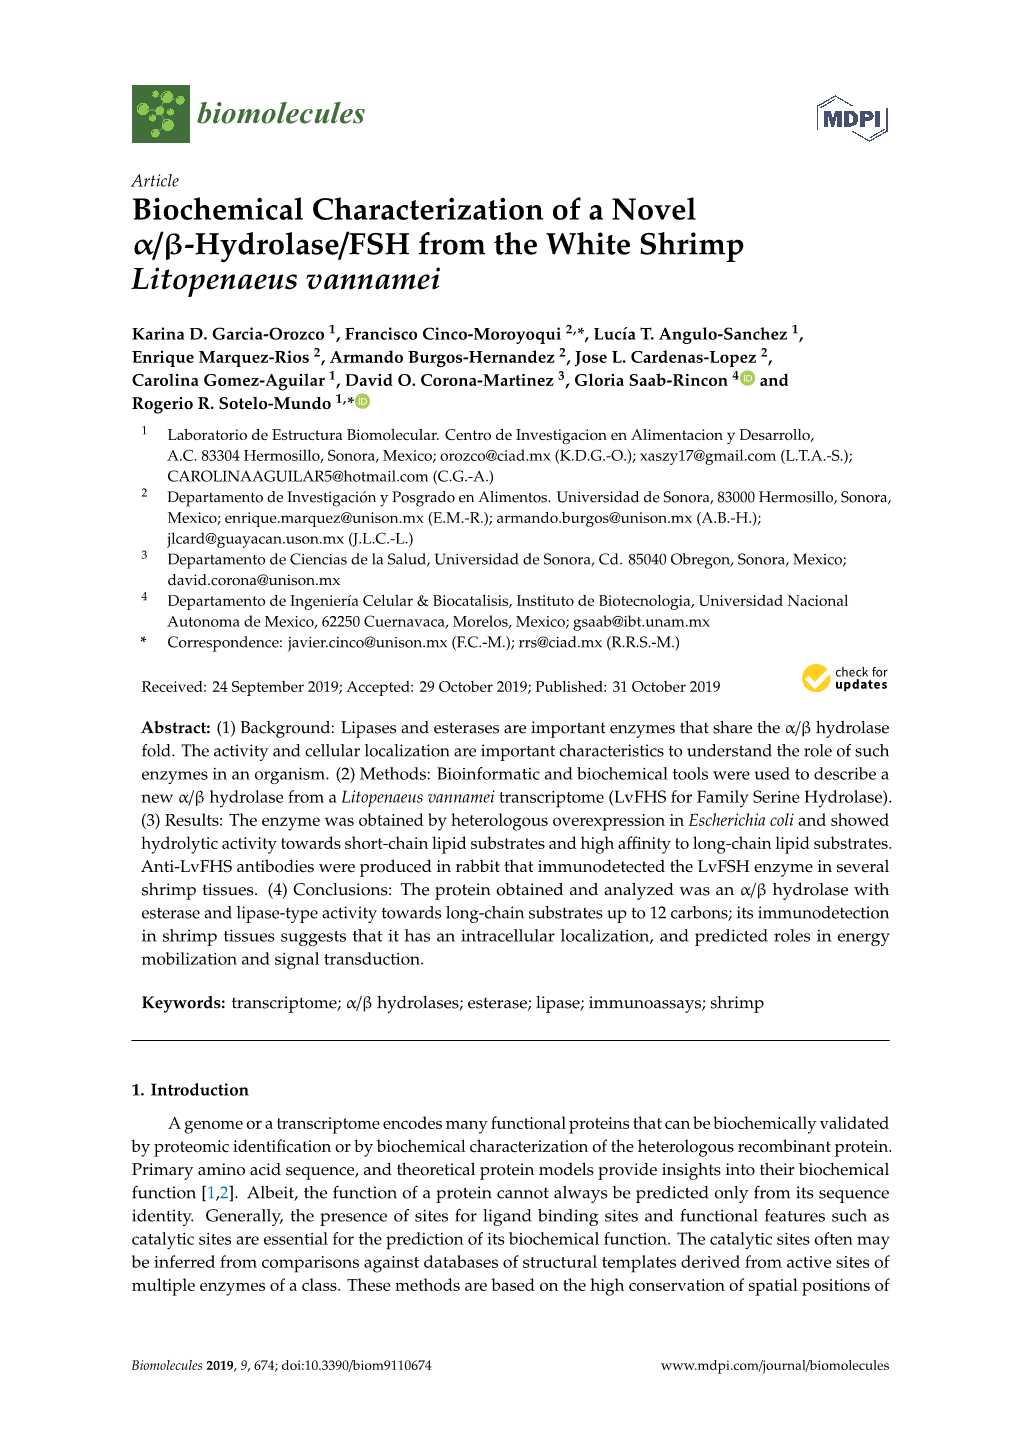 Hydrolase/FSH from the White Shrimp Litopenaeus Vannamei